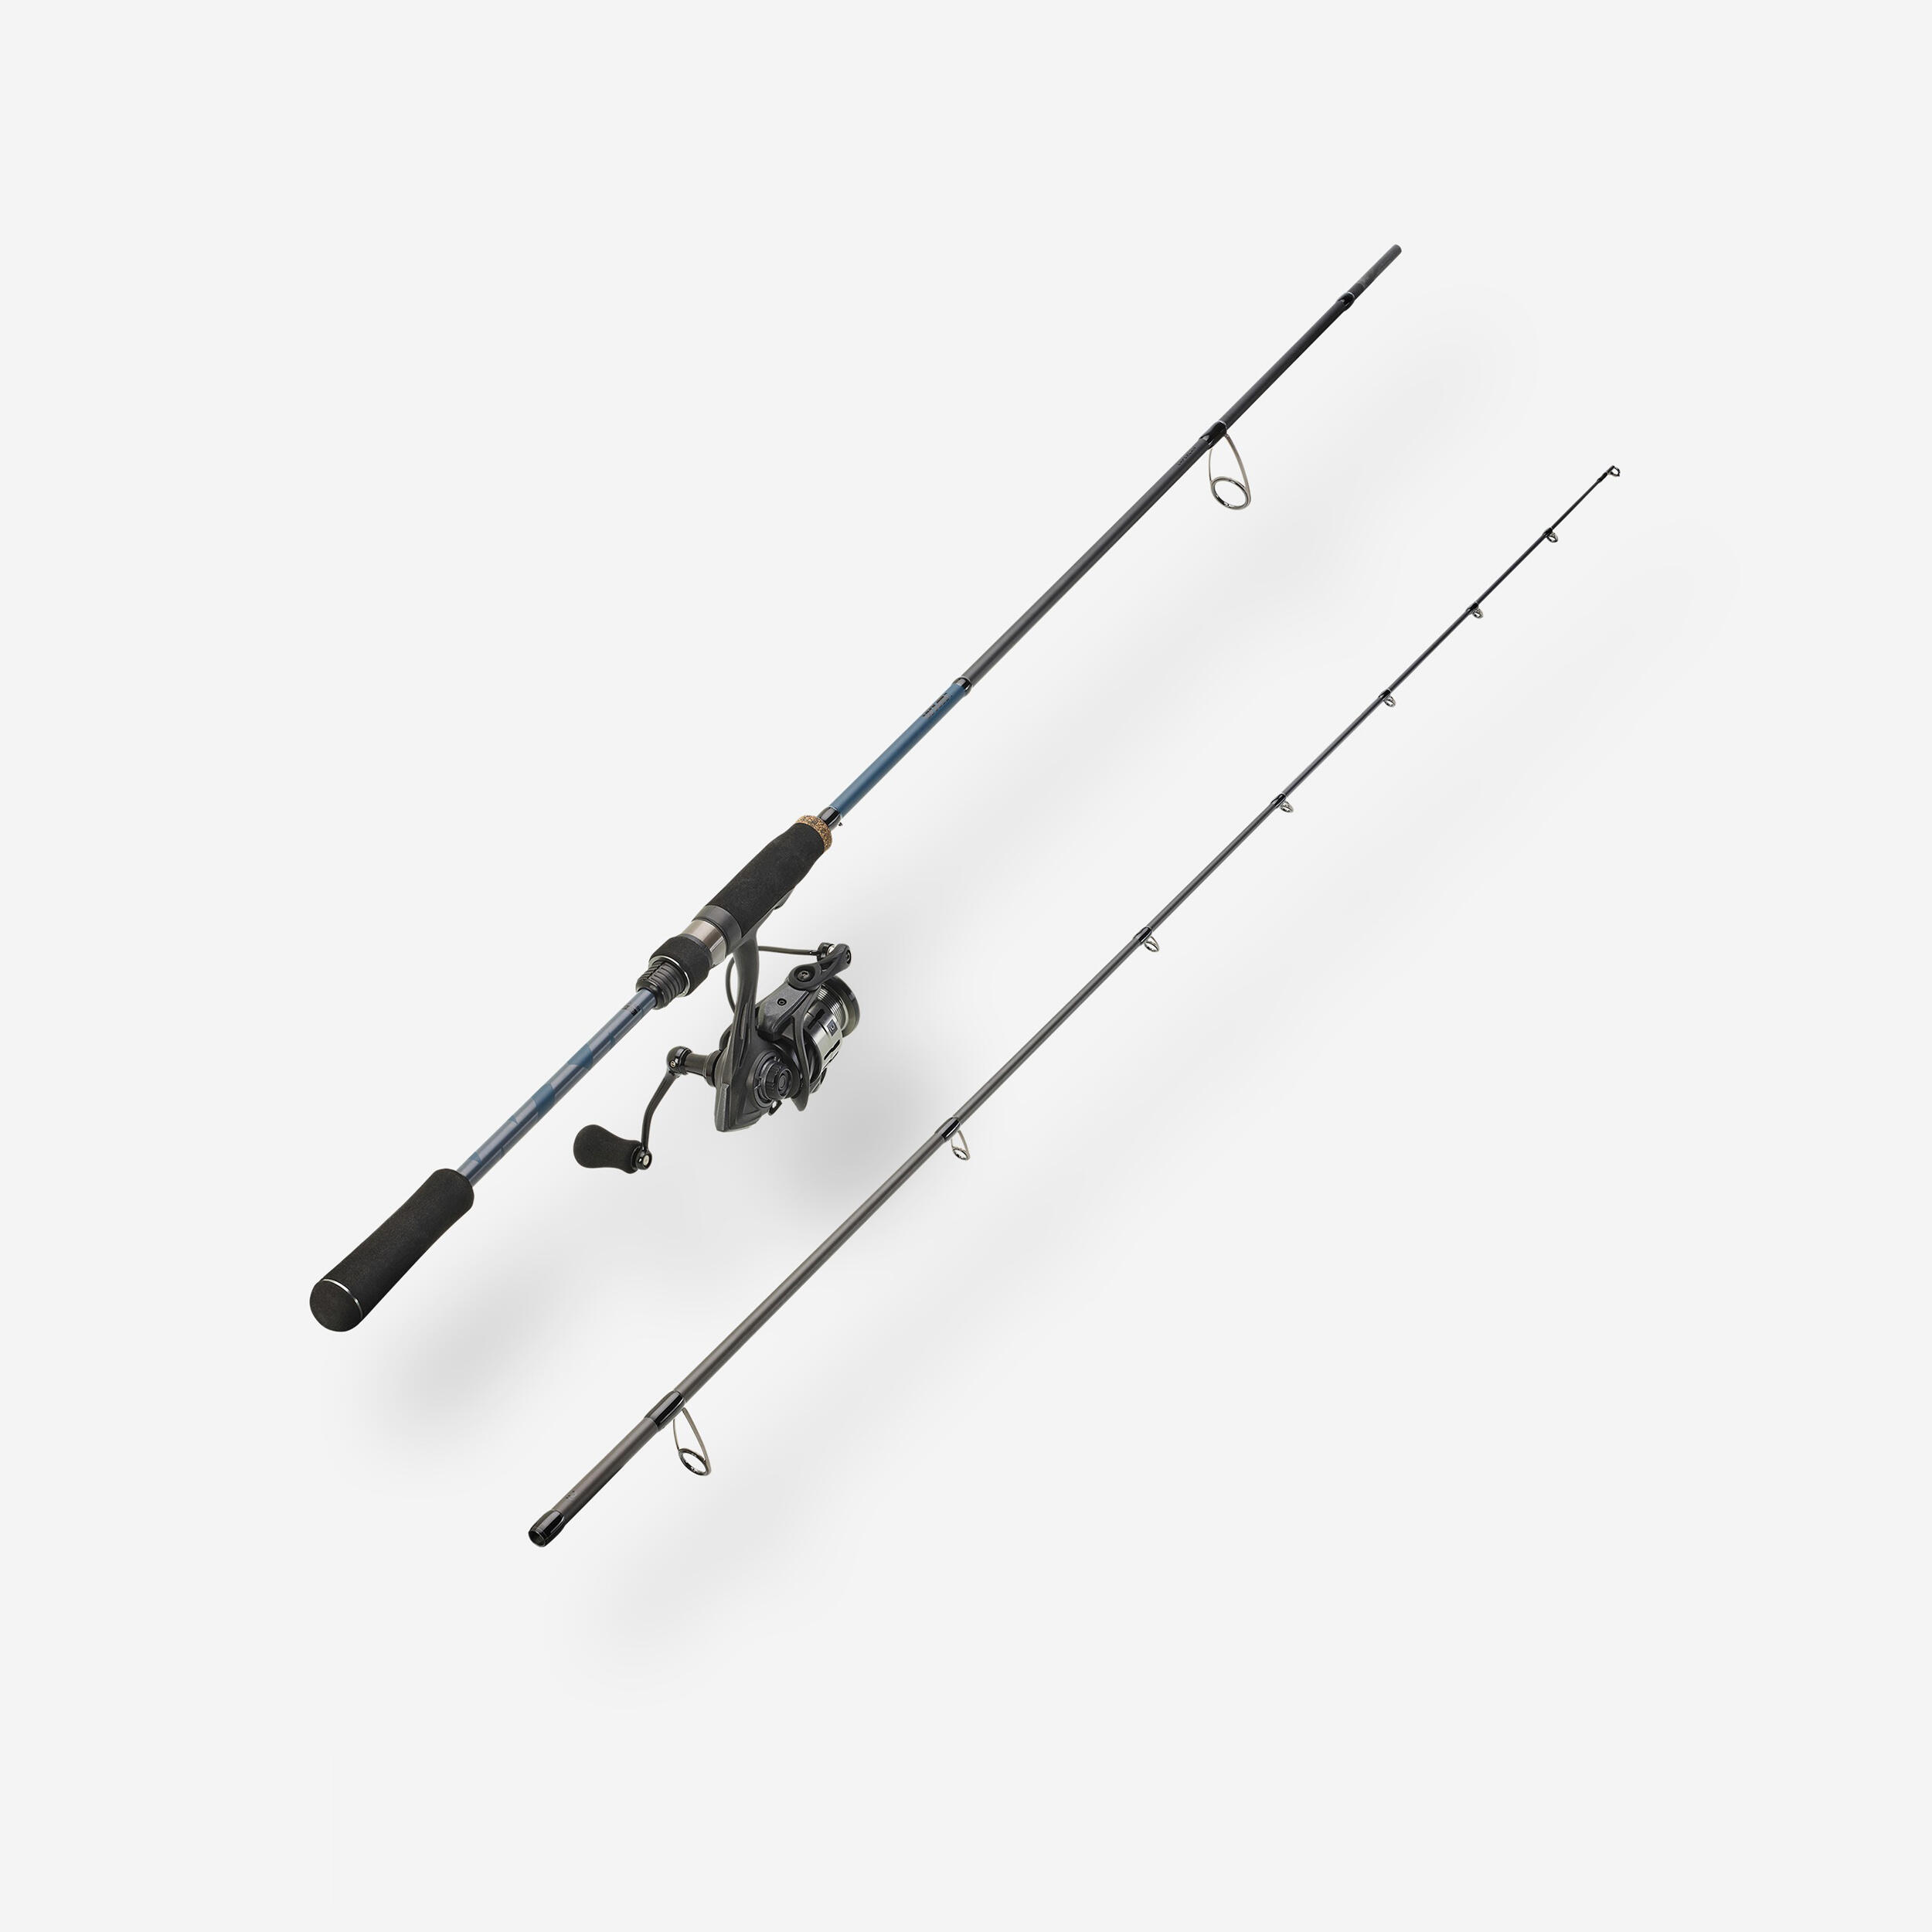 Fishing Rods, Lures, Baits, Ice Fishing & Equipment - Decathlon